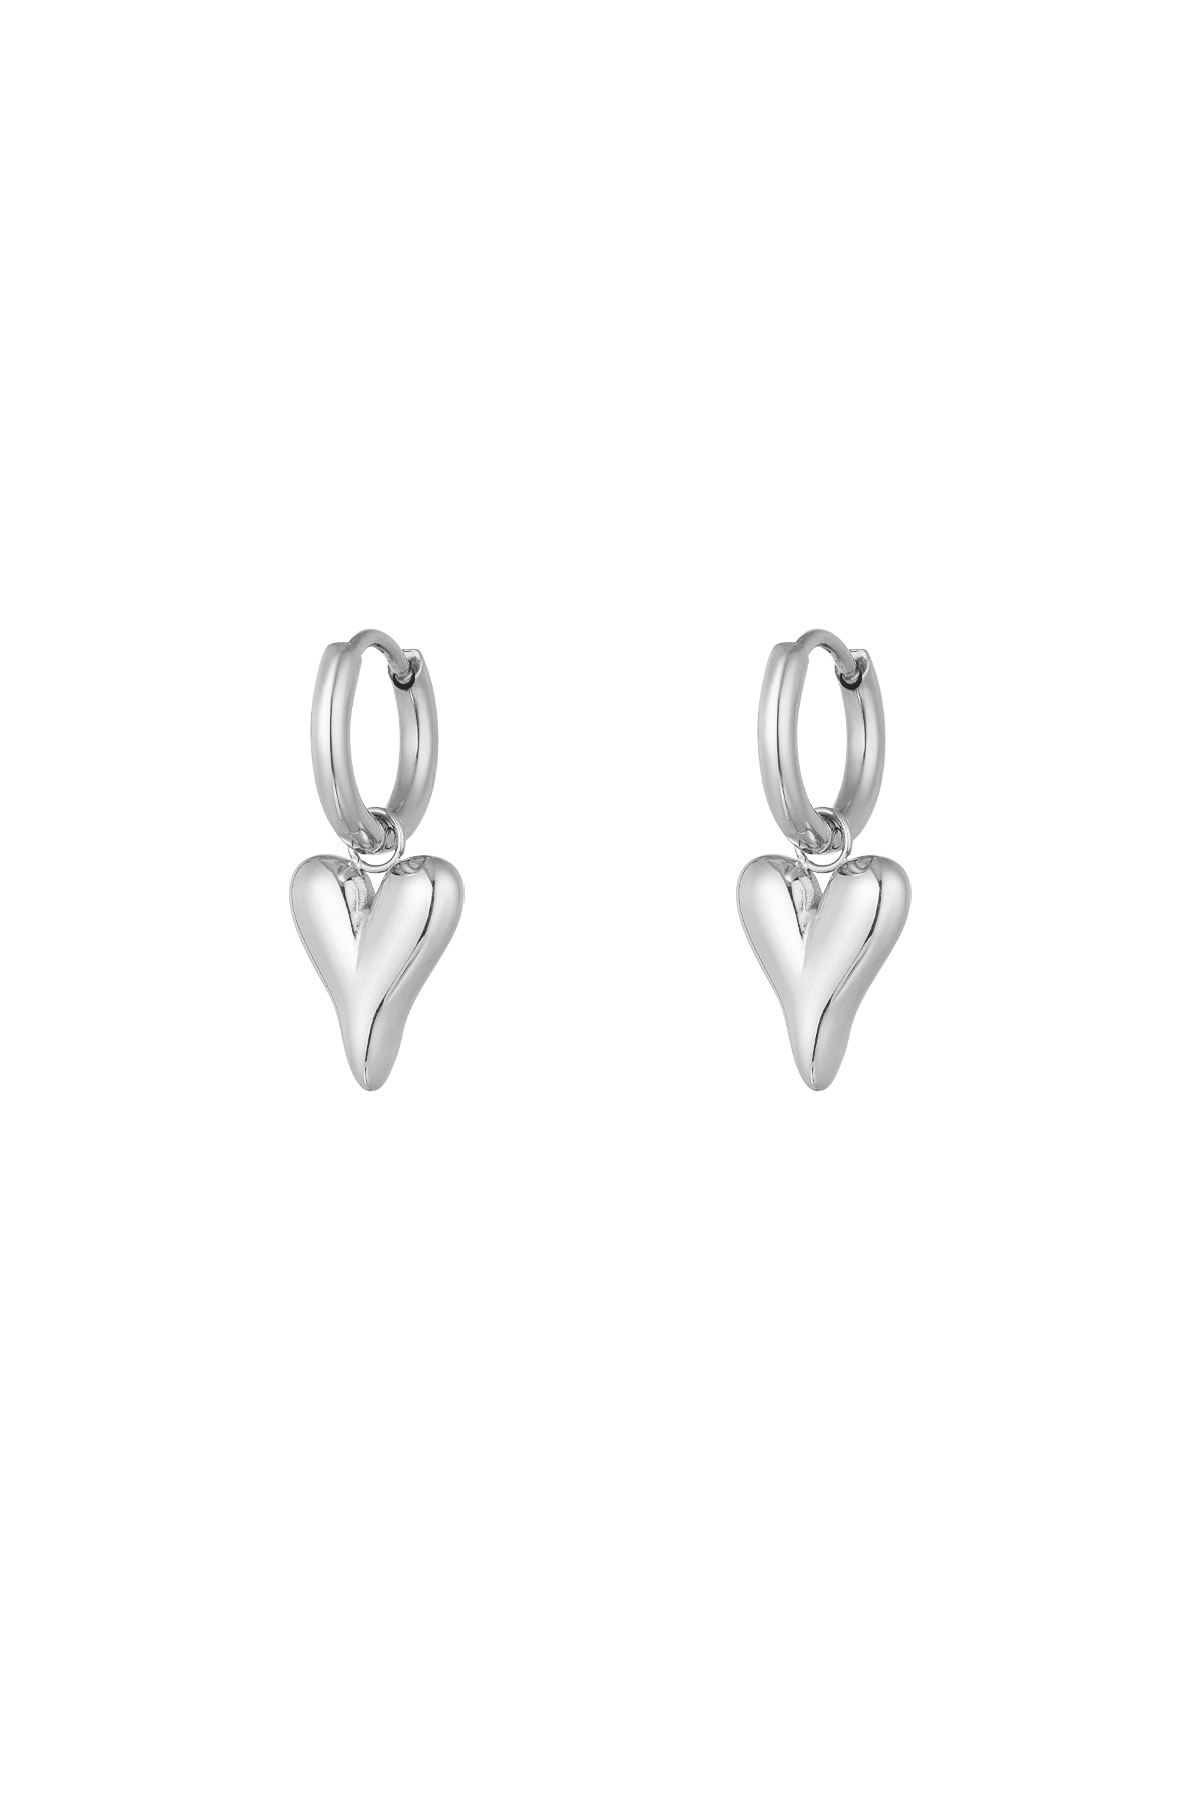 Herzförmige Ohrringe aus Edelstahl – Silber h5 